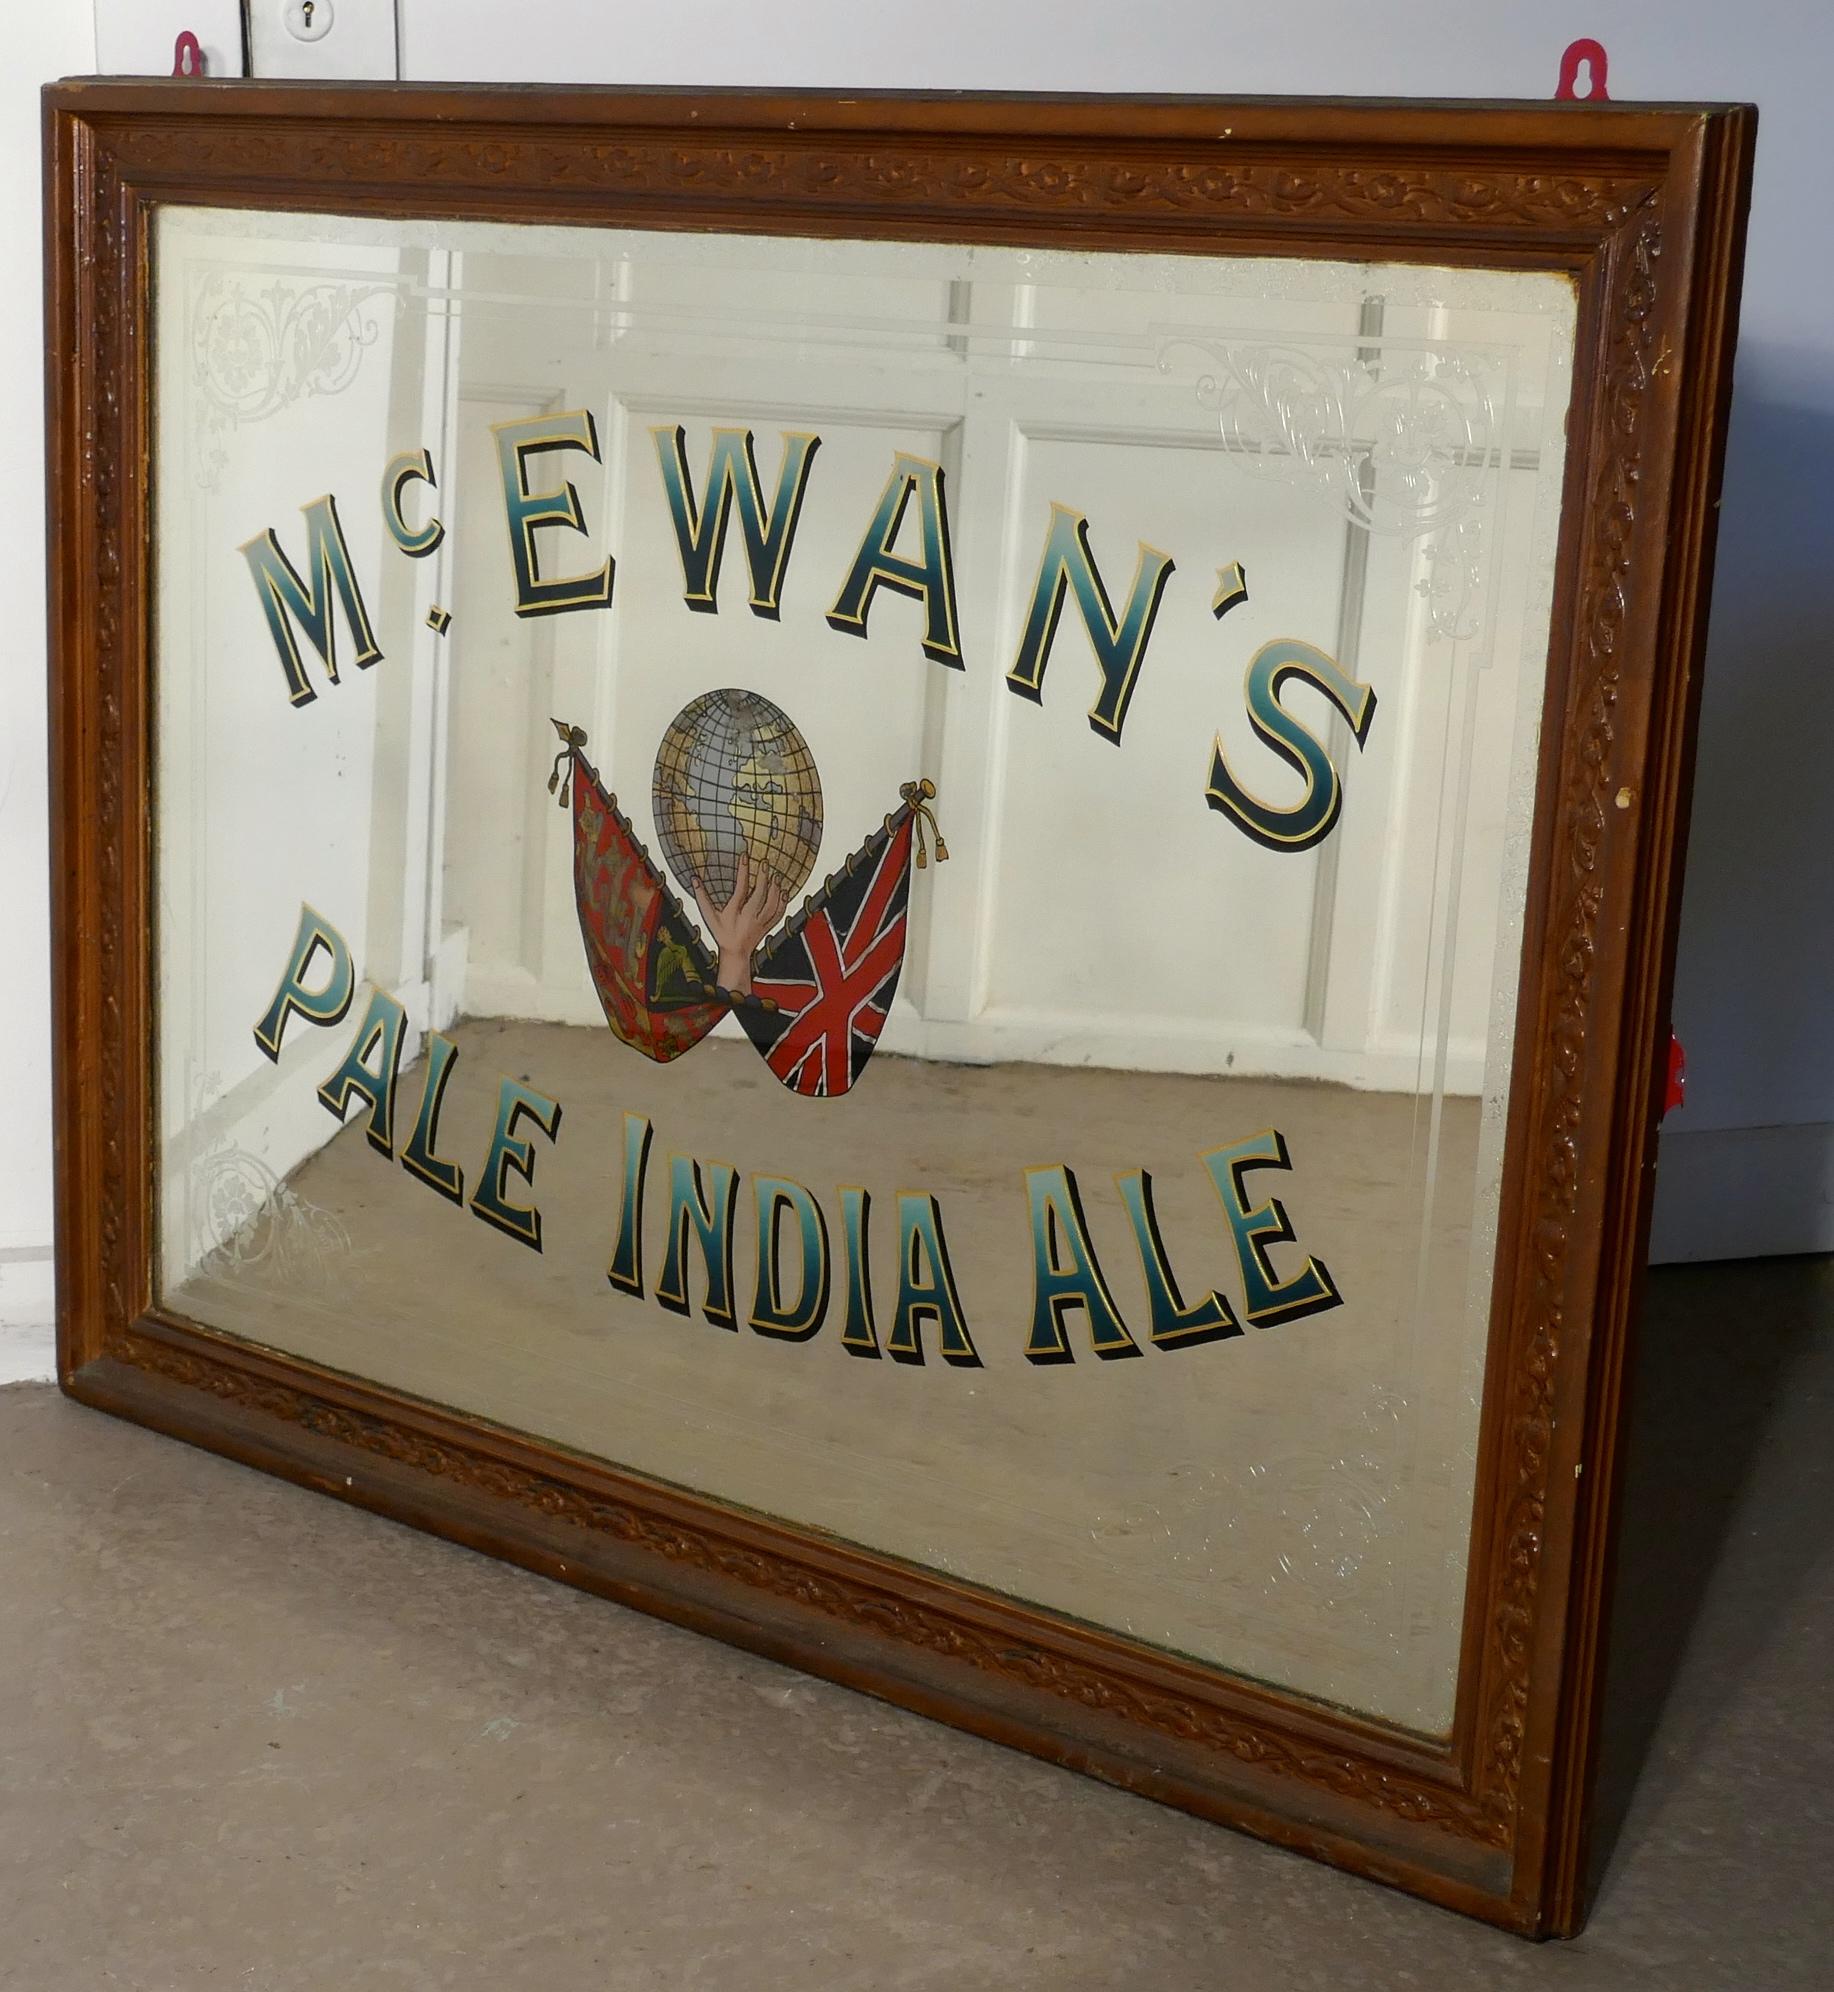 20th Century Large Mc Ewan’s Pale India Ale Advertising Mirror, Pub Mirror for Mc Ewans’s